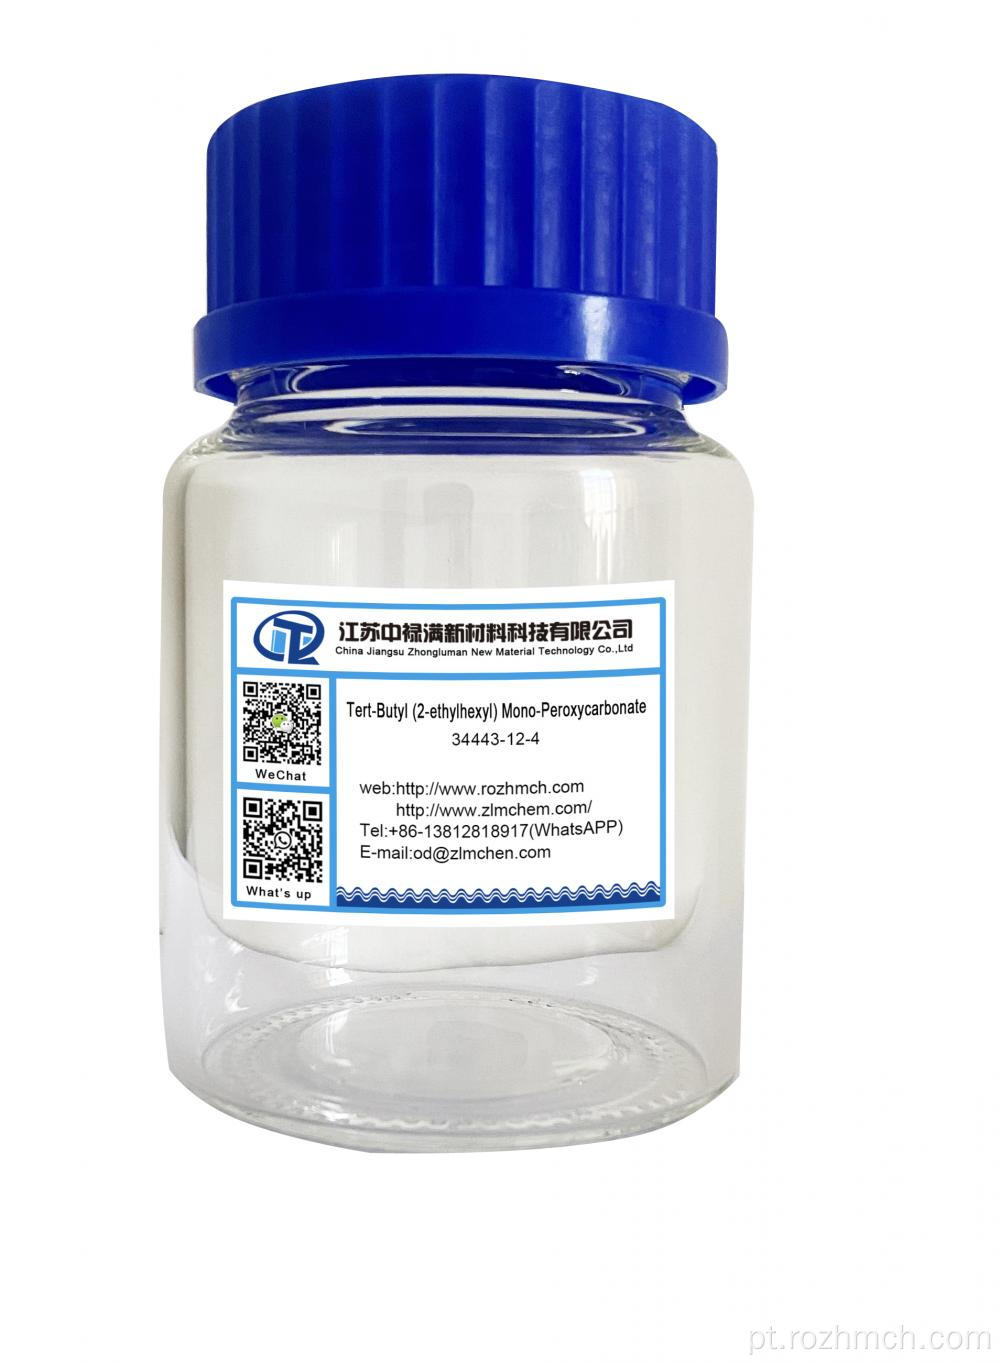 Tert butil (2-etilhexil) mono peroxicarbonato